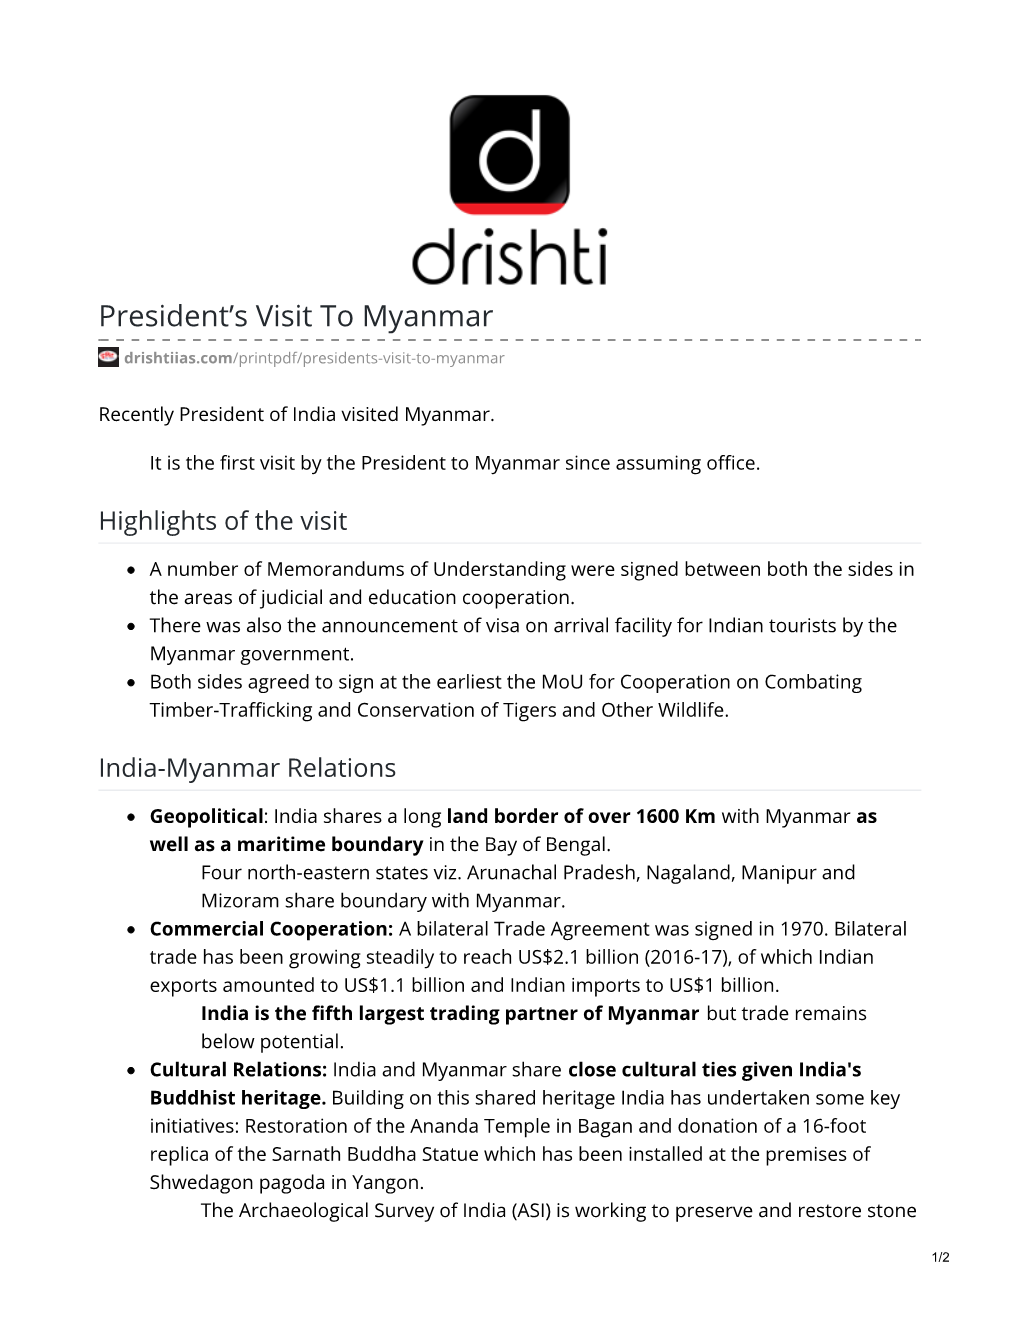 President's Visit to Myanmar